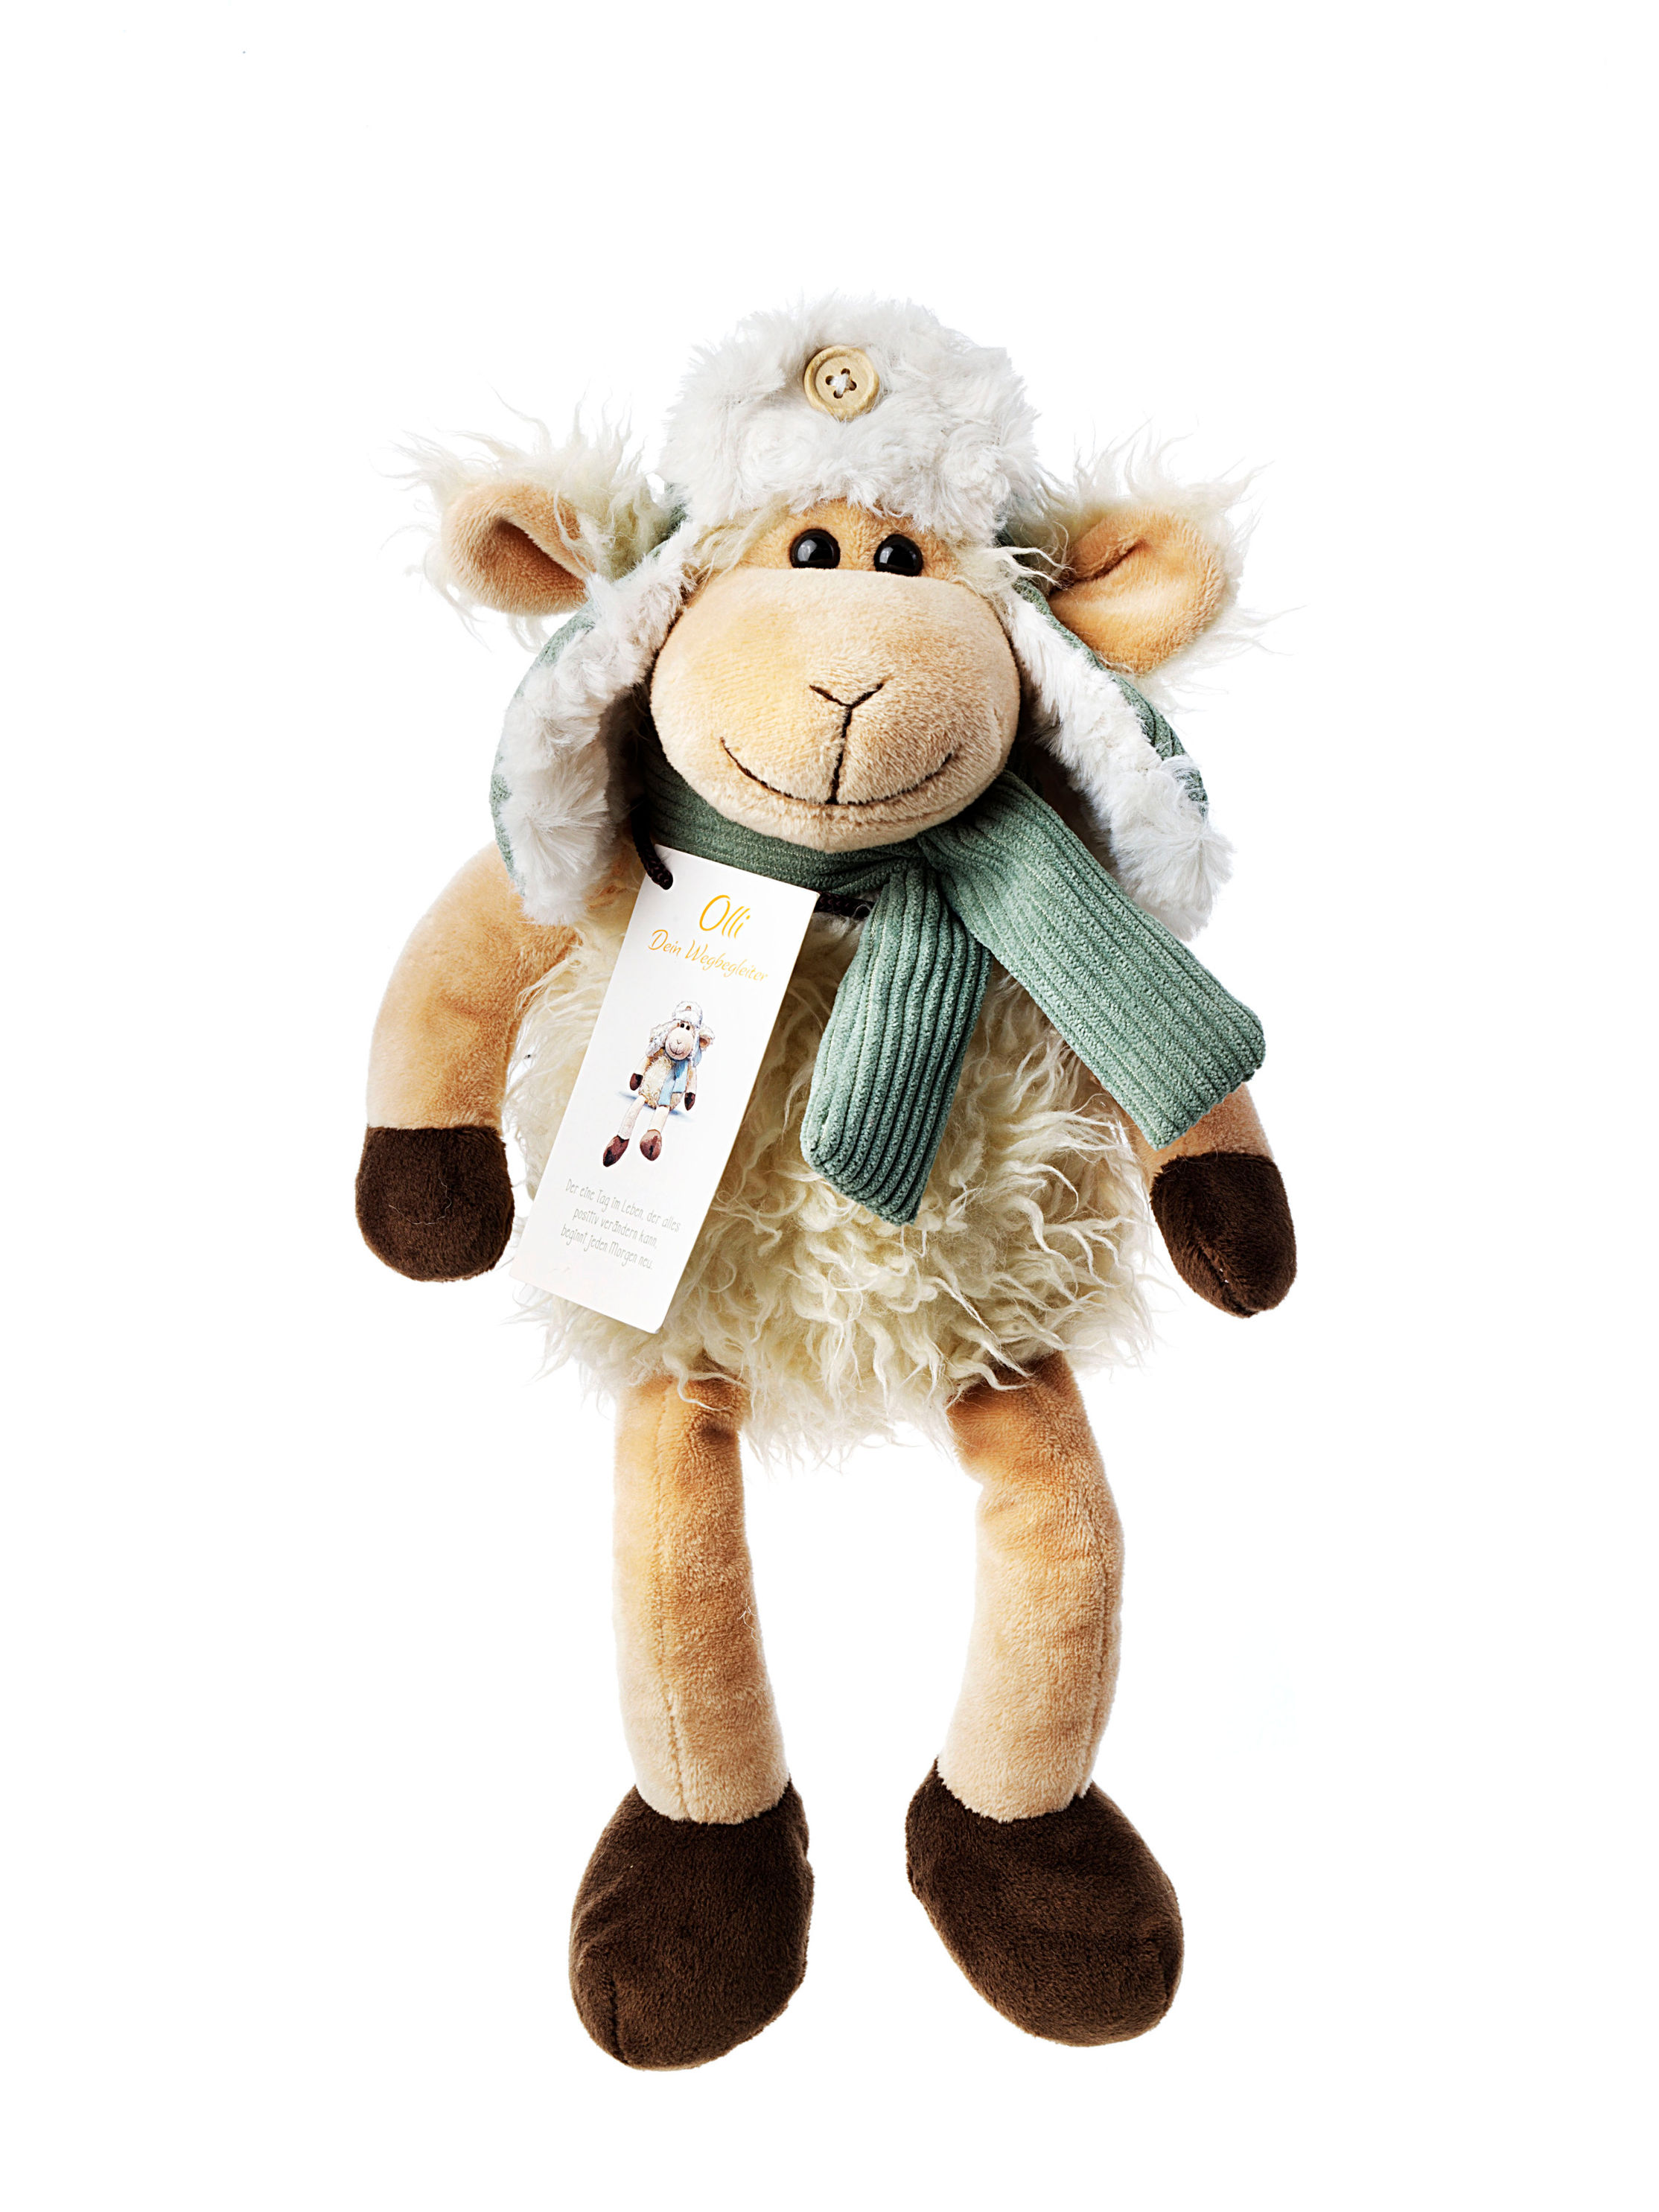 Plüsch-Schaf Olli jetzt bei Weltbild.de bestellen